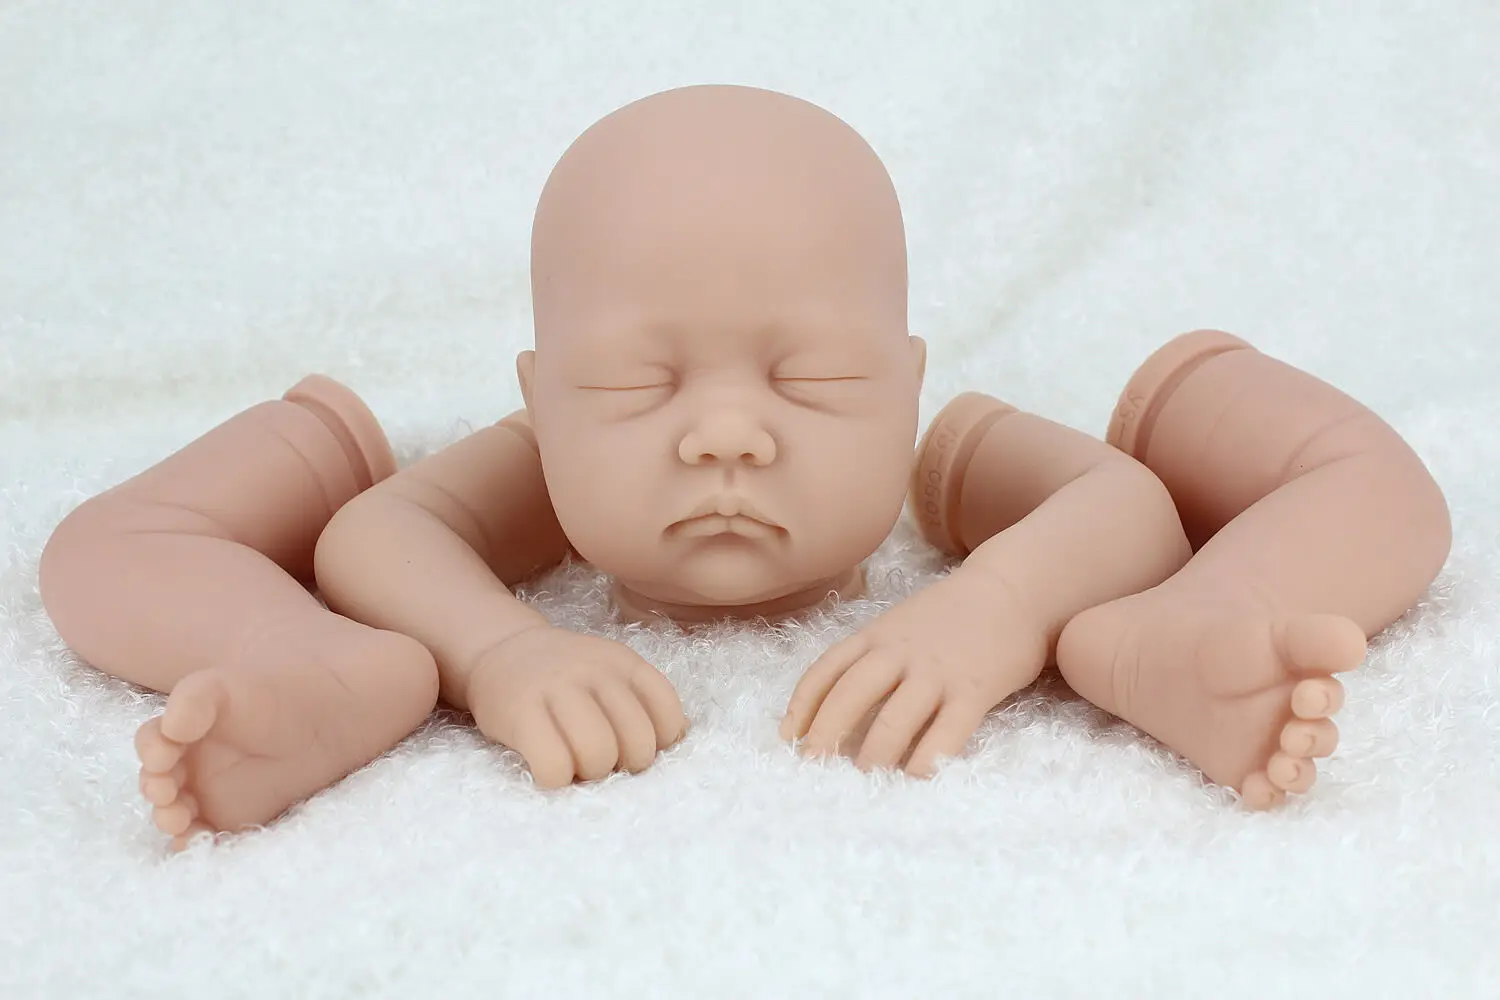 3/4Limbs for 22" Dolls Unpainted Soft Vinyl Doll Kits DIY Reborn Baby Mold Head 